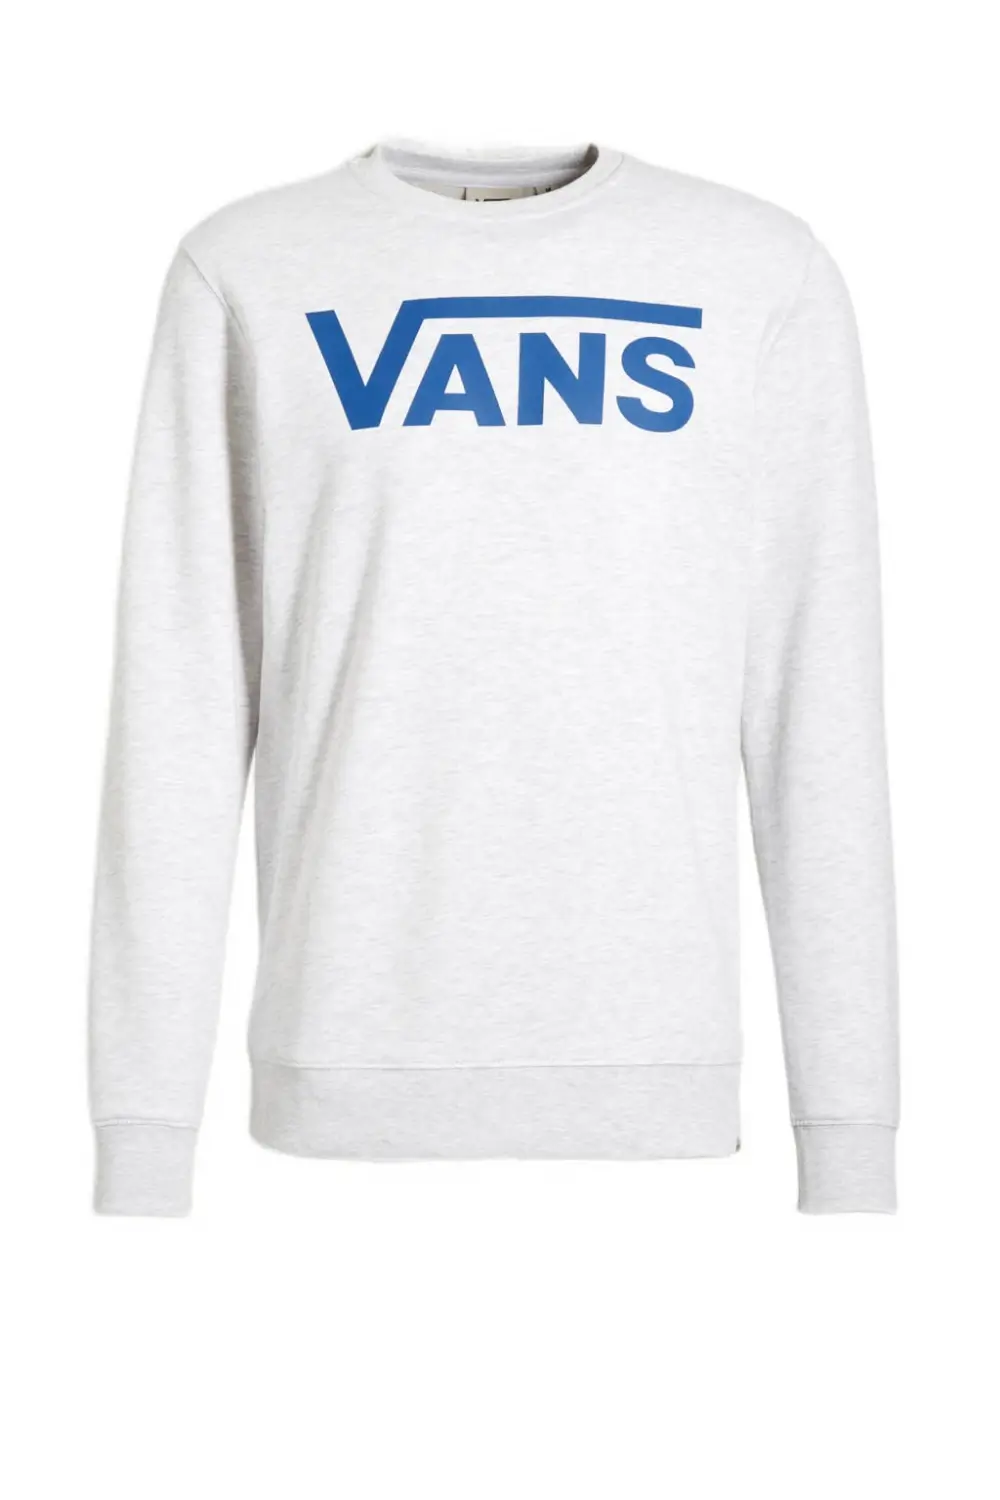 VANS Vans Drop V Crew-B  Erkek Sweatshirt - VN0A5LODT8J1